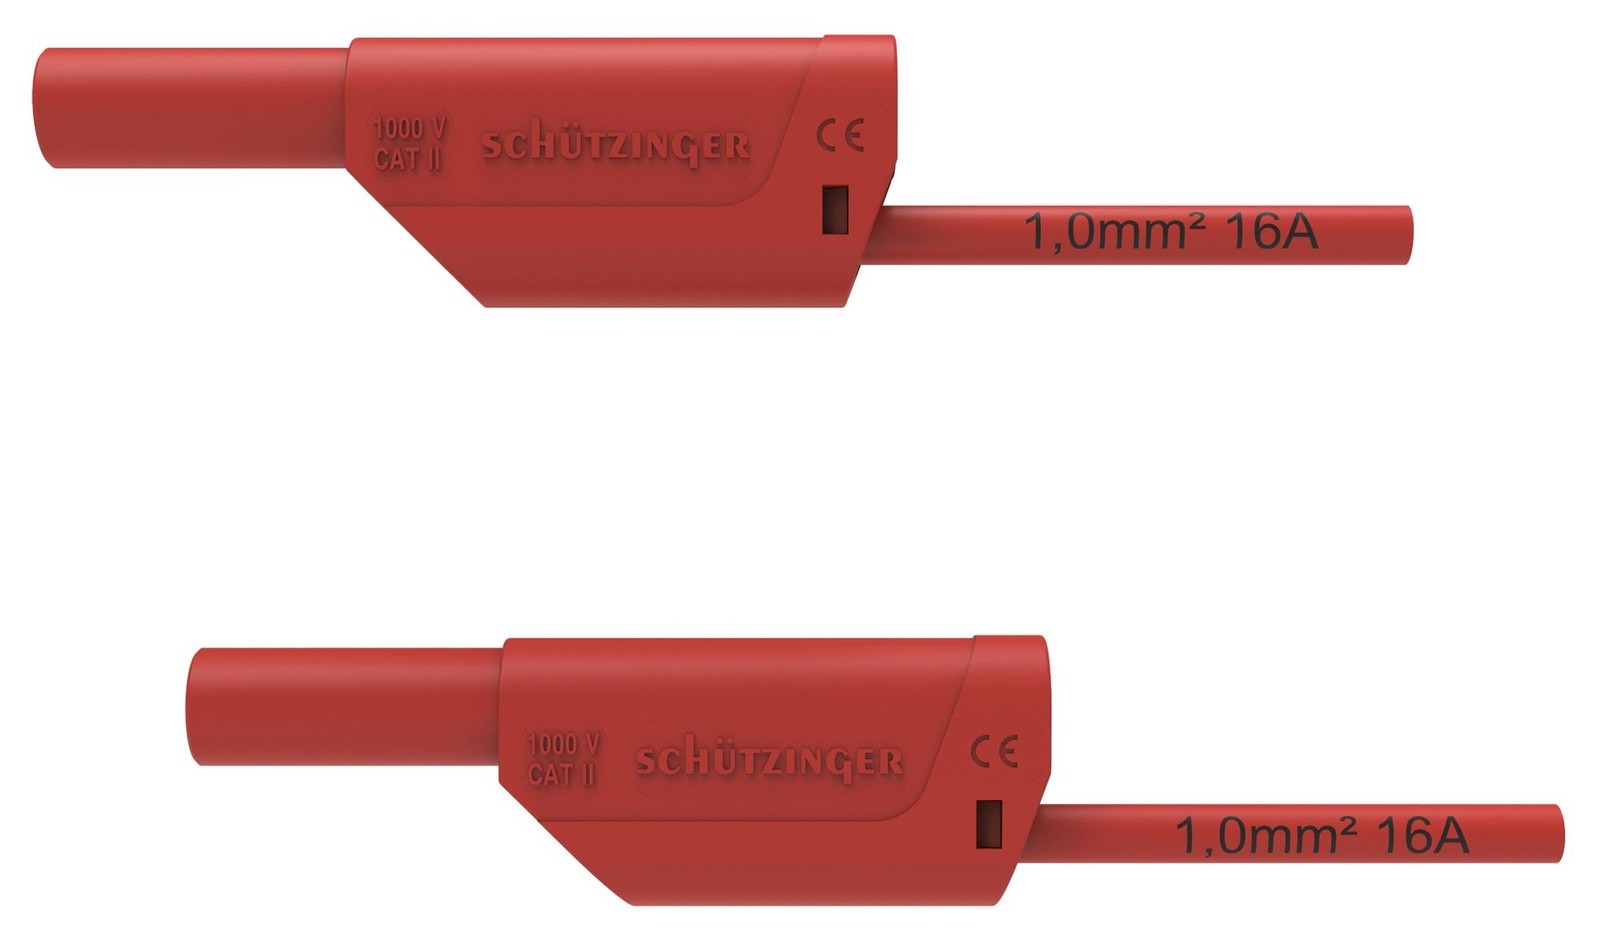 Schutzinger Di Vsfk 8500 / 1 / 200 / Rt 4mm Banana Plug-Sq, Shrouded, Red, 2M